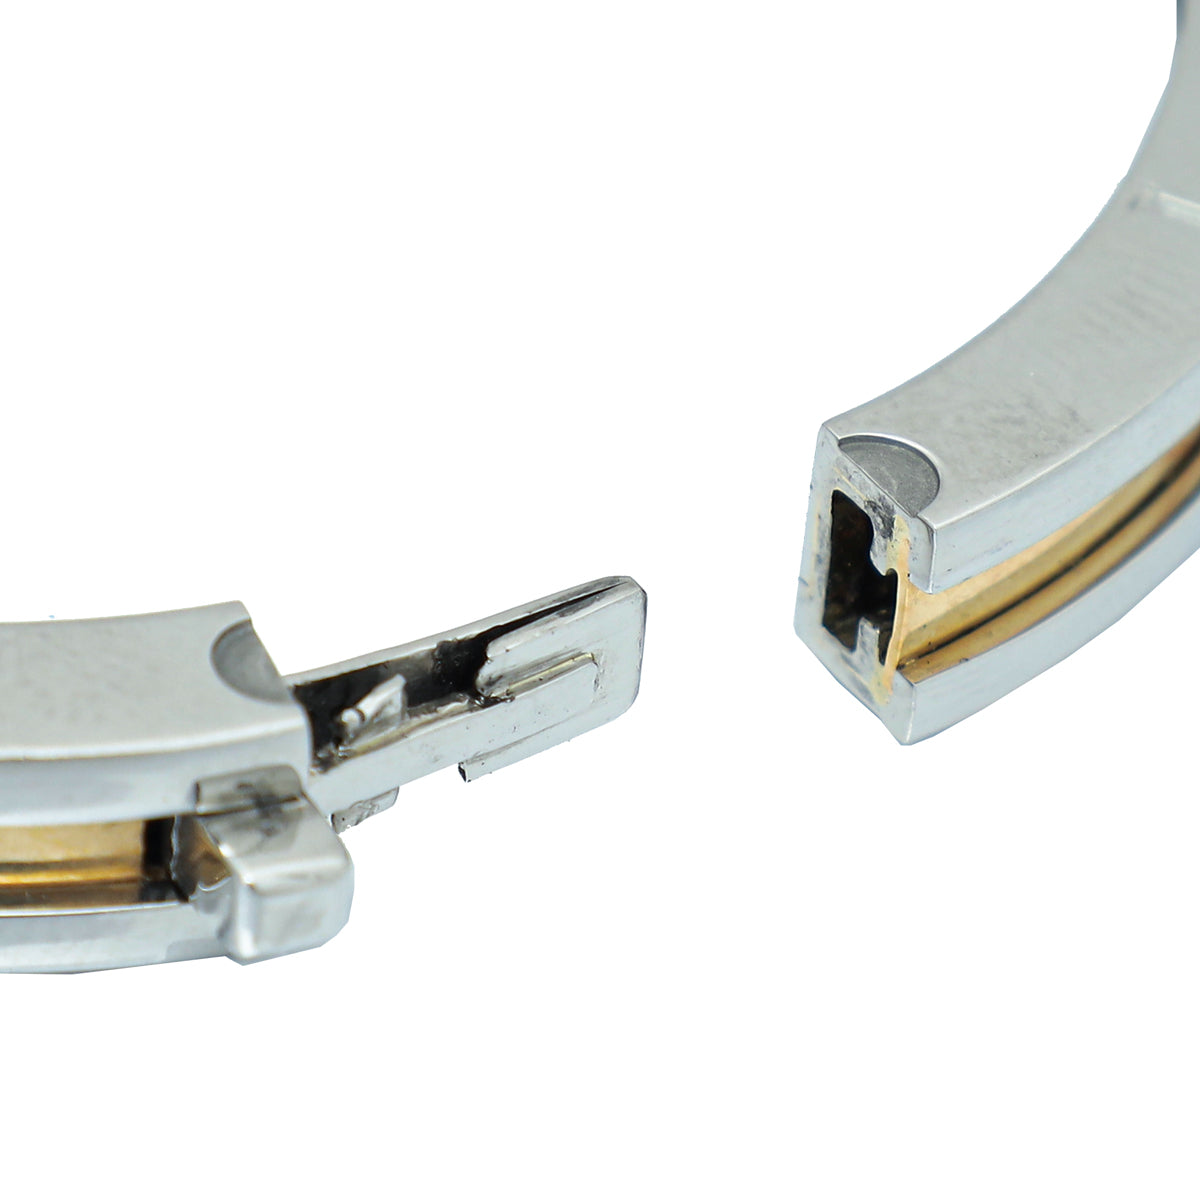 Bvlgari Steel & Gold B.Zero 1 Bracelet